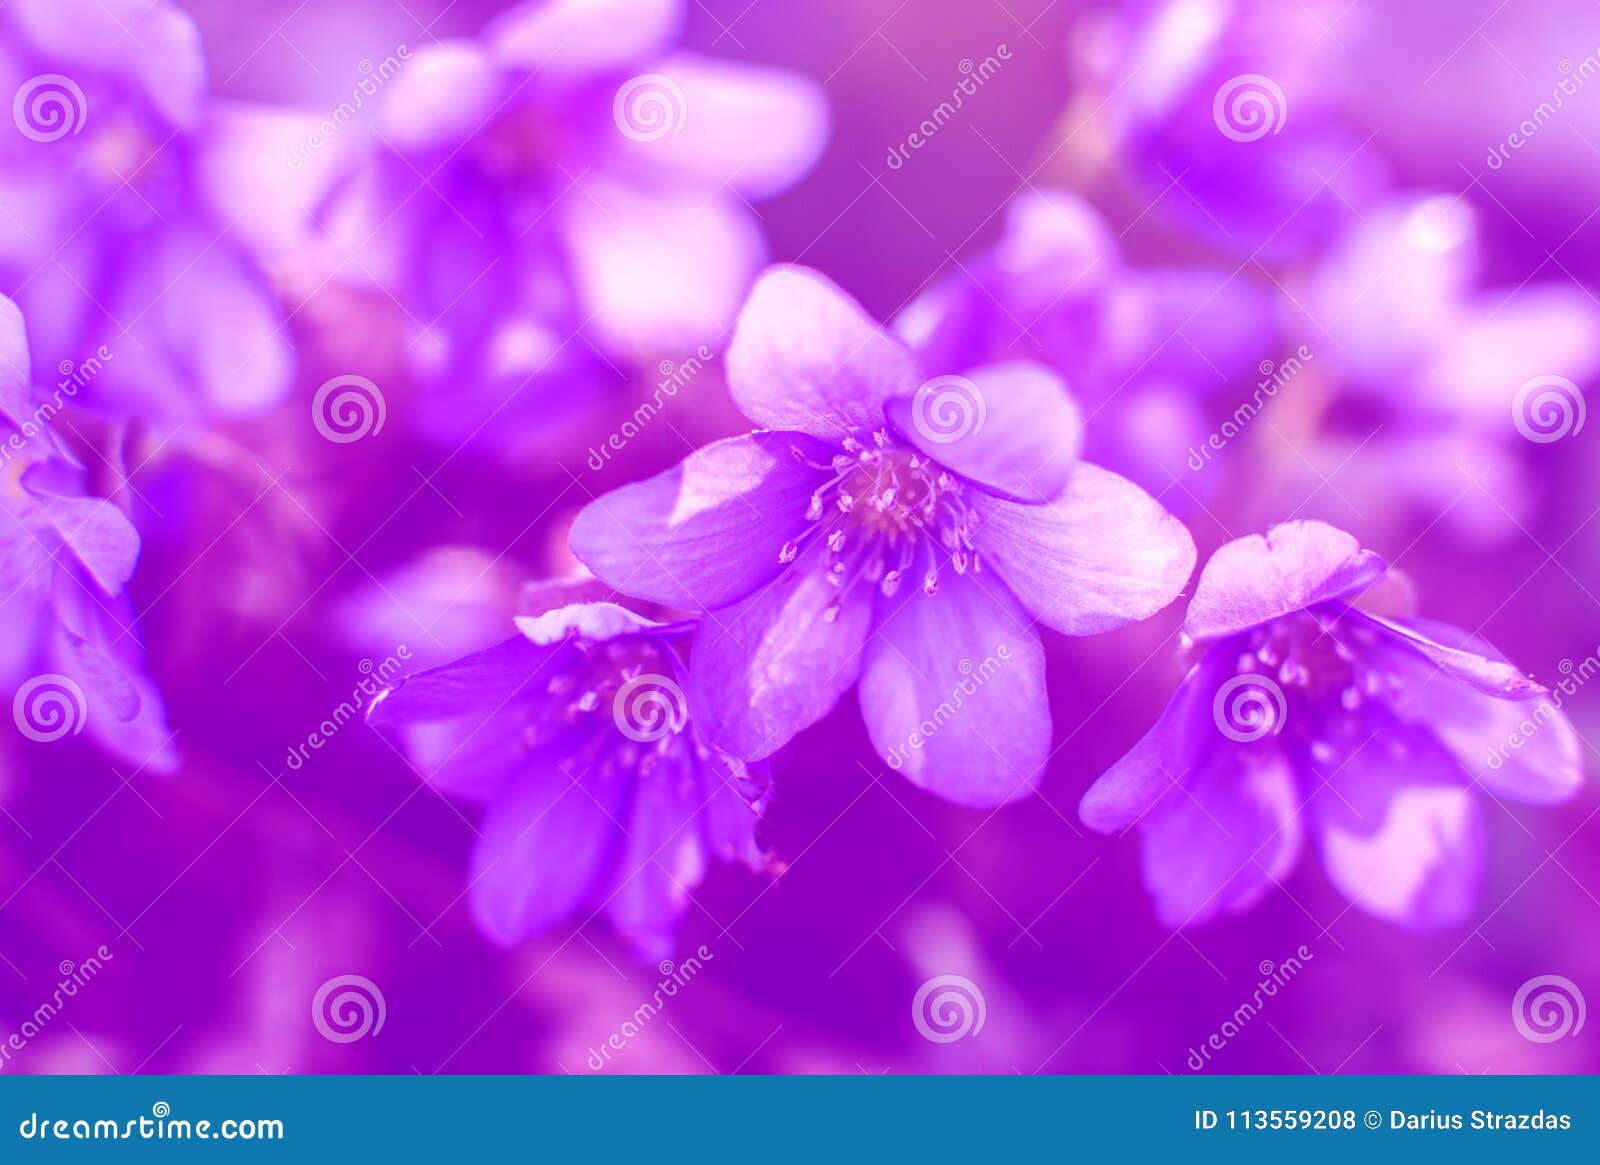 Wild violet flowers stock photo. Image of wild, purple - 113559208